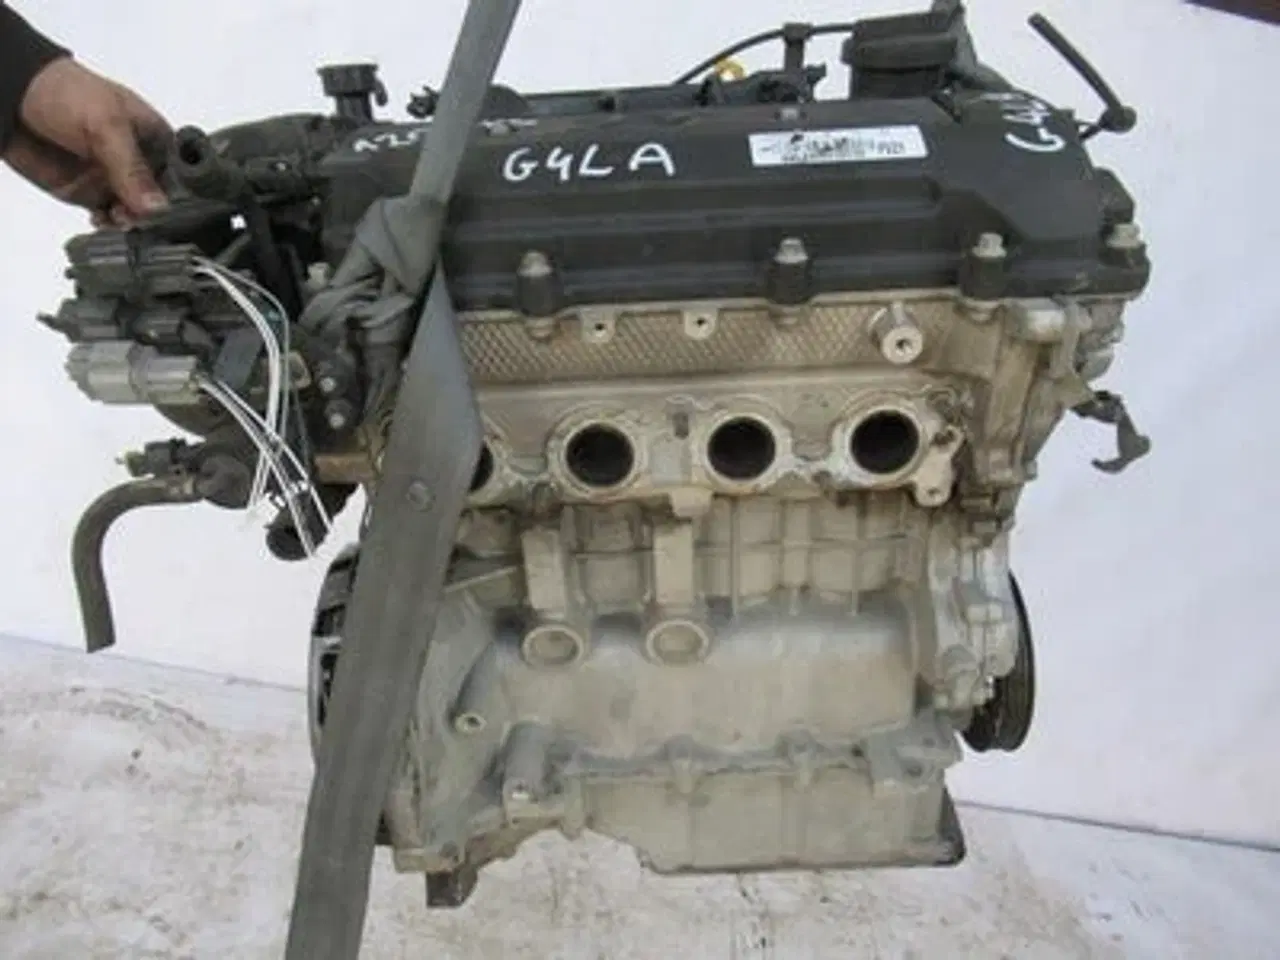 Billede 1 - Hyundai i20 G4LA motor